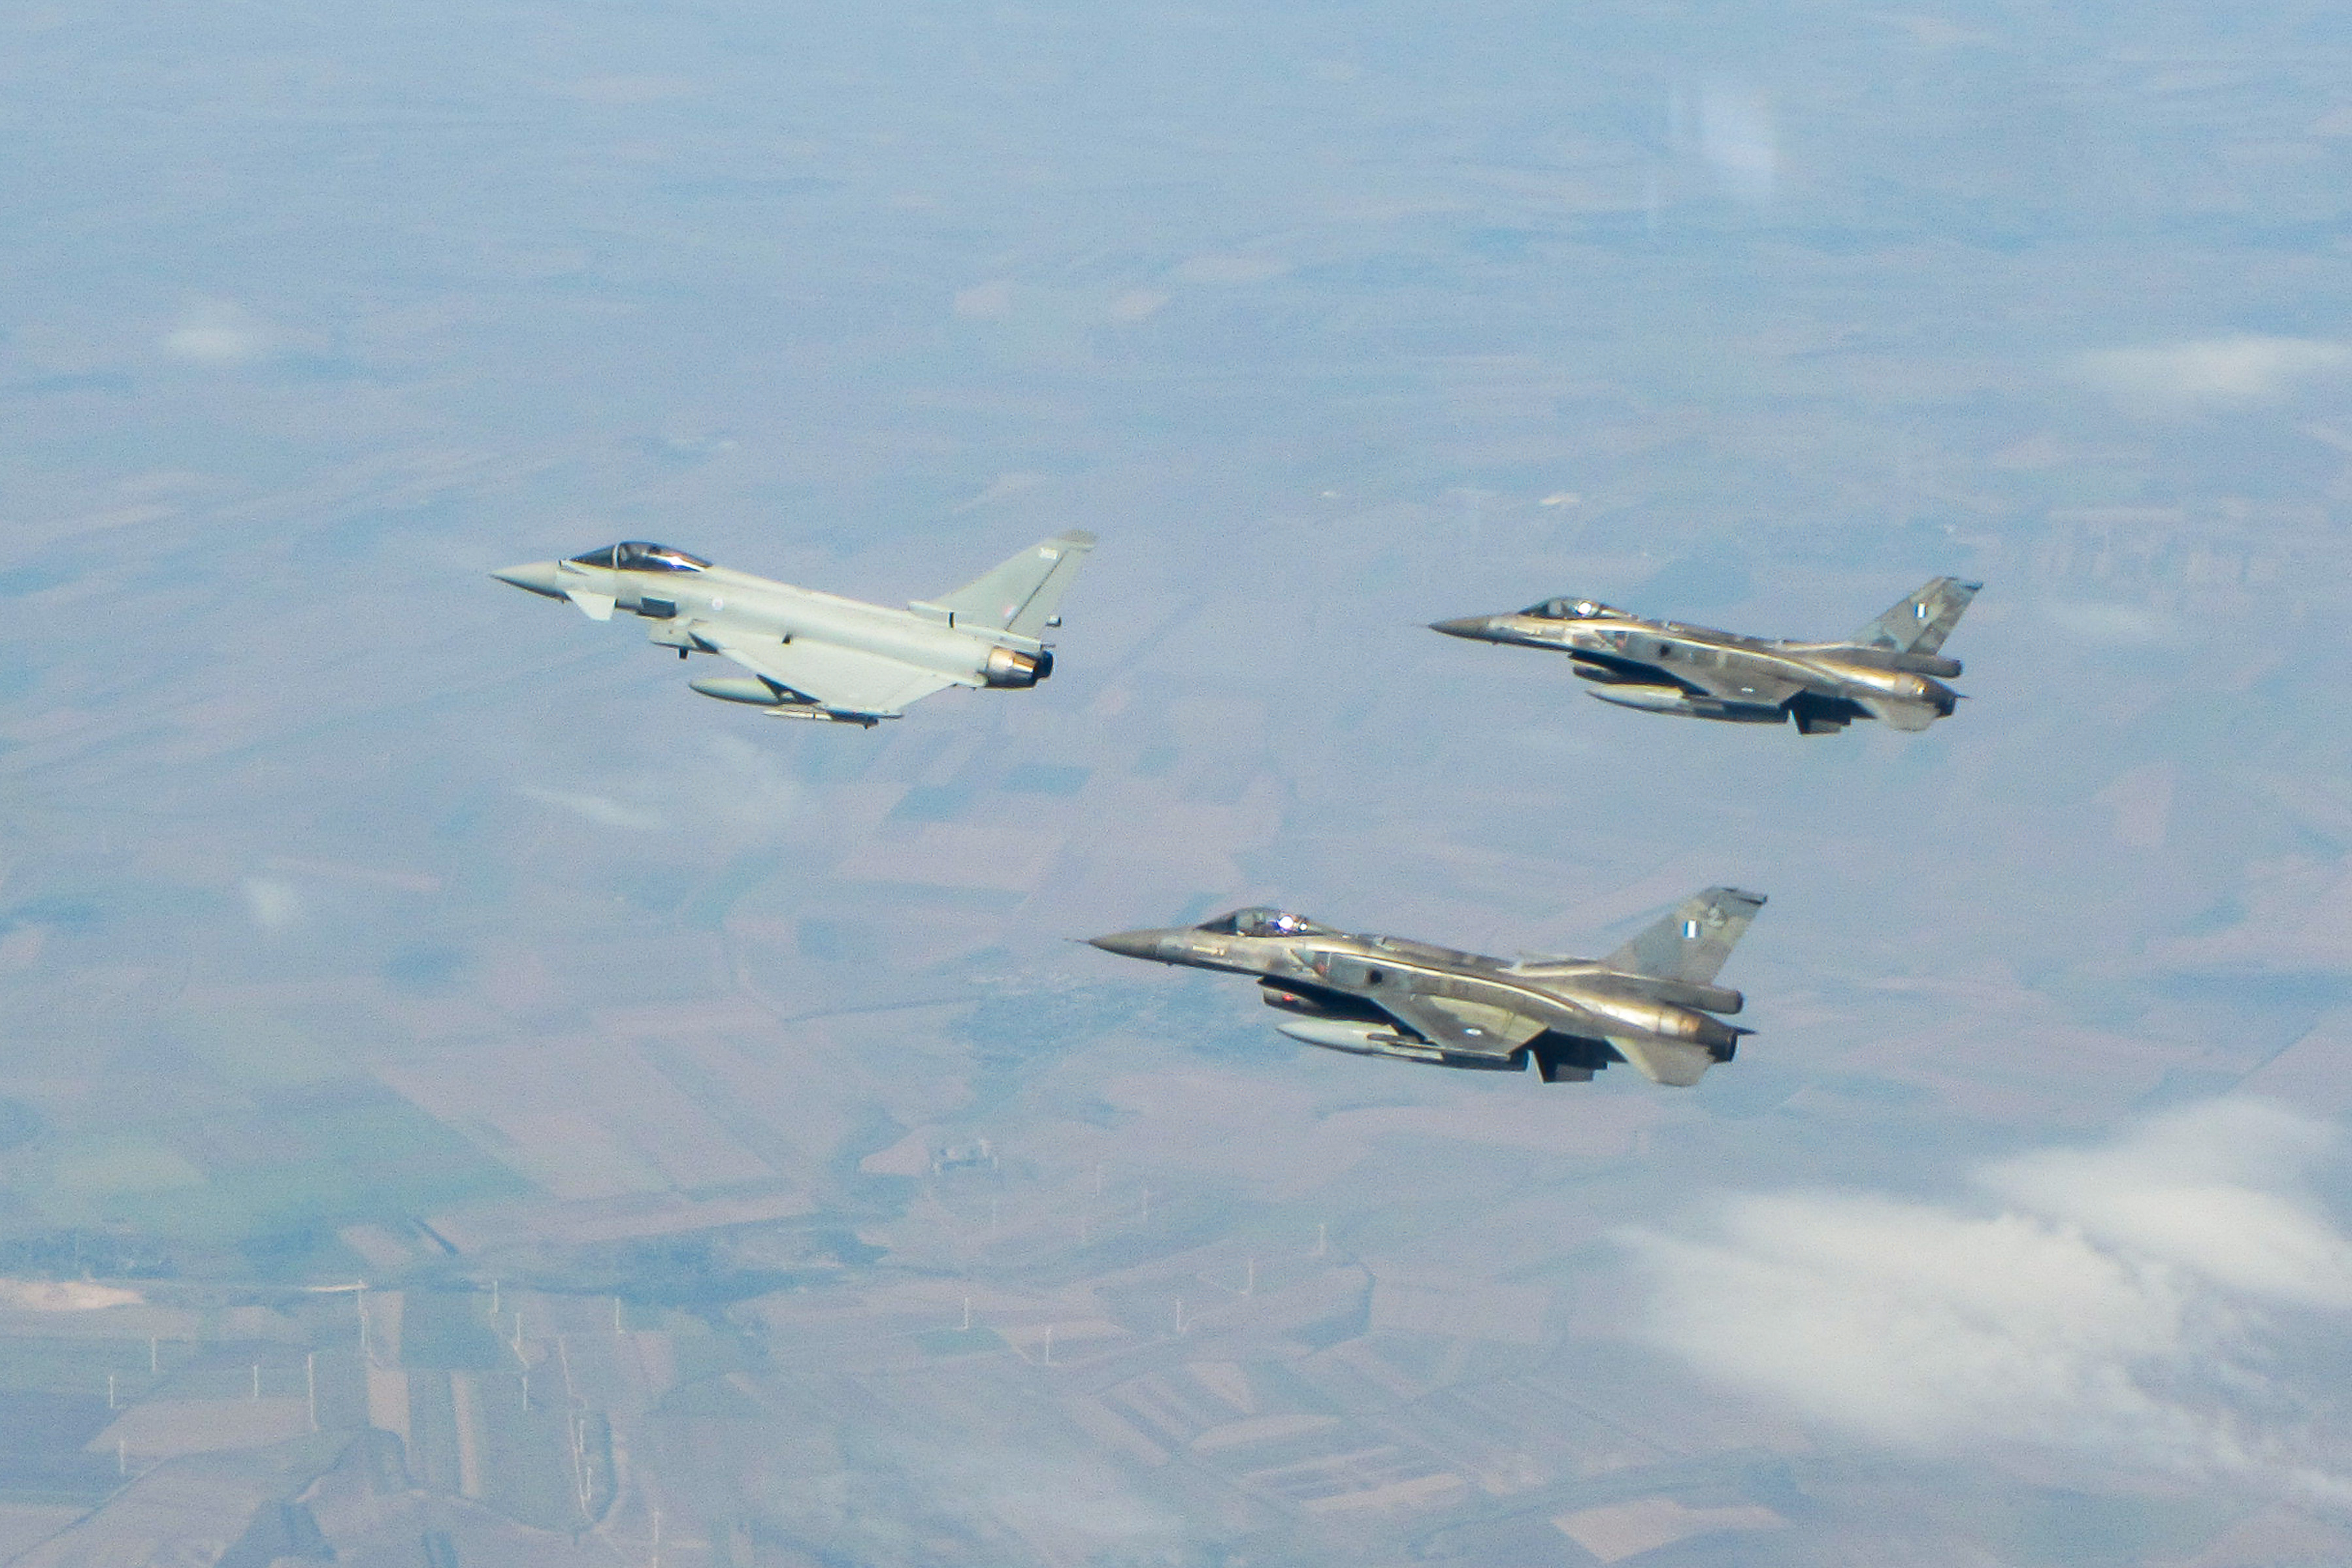 Image shows three Typhoon aircraft in flight.